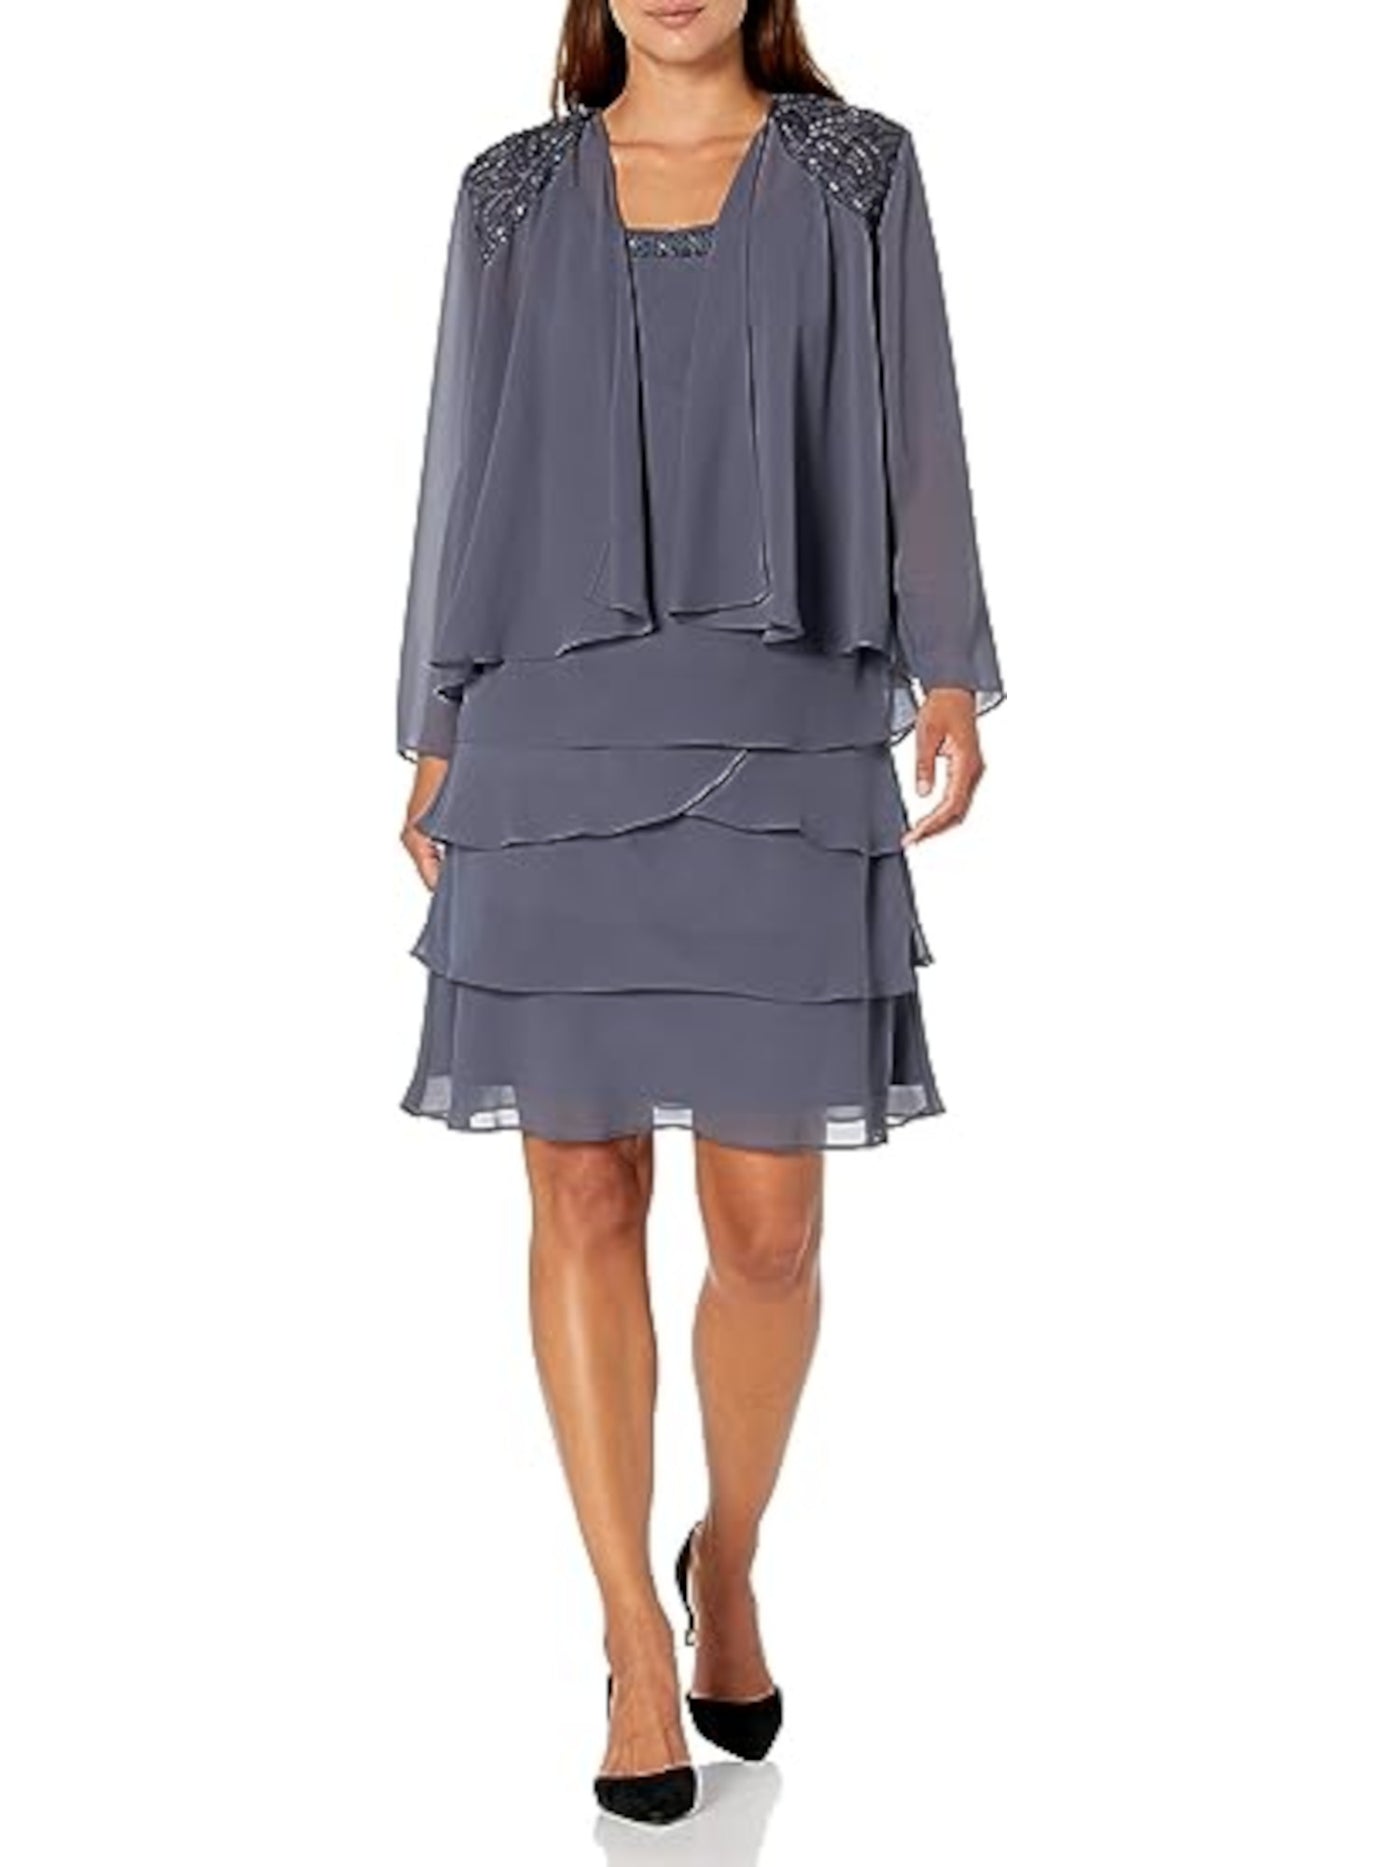 SLNY Womens Gray Sheer Embellished Lace Shoulder Pads Long Sleeve Open Front Formal Cardigan 8